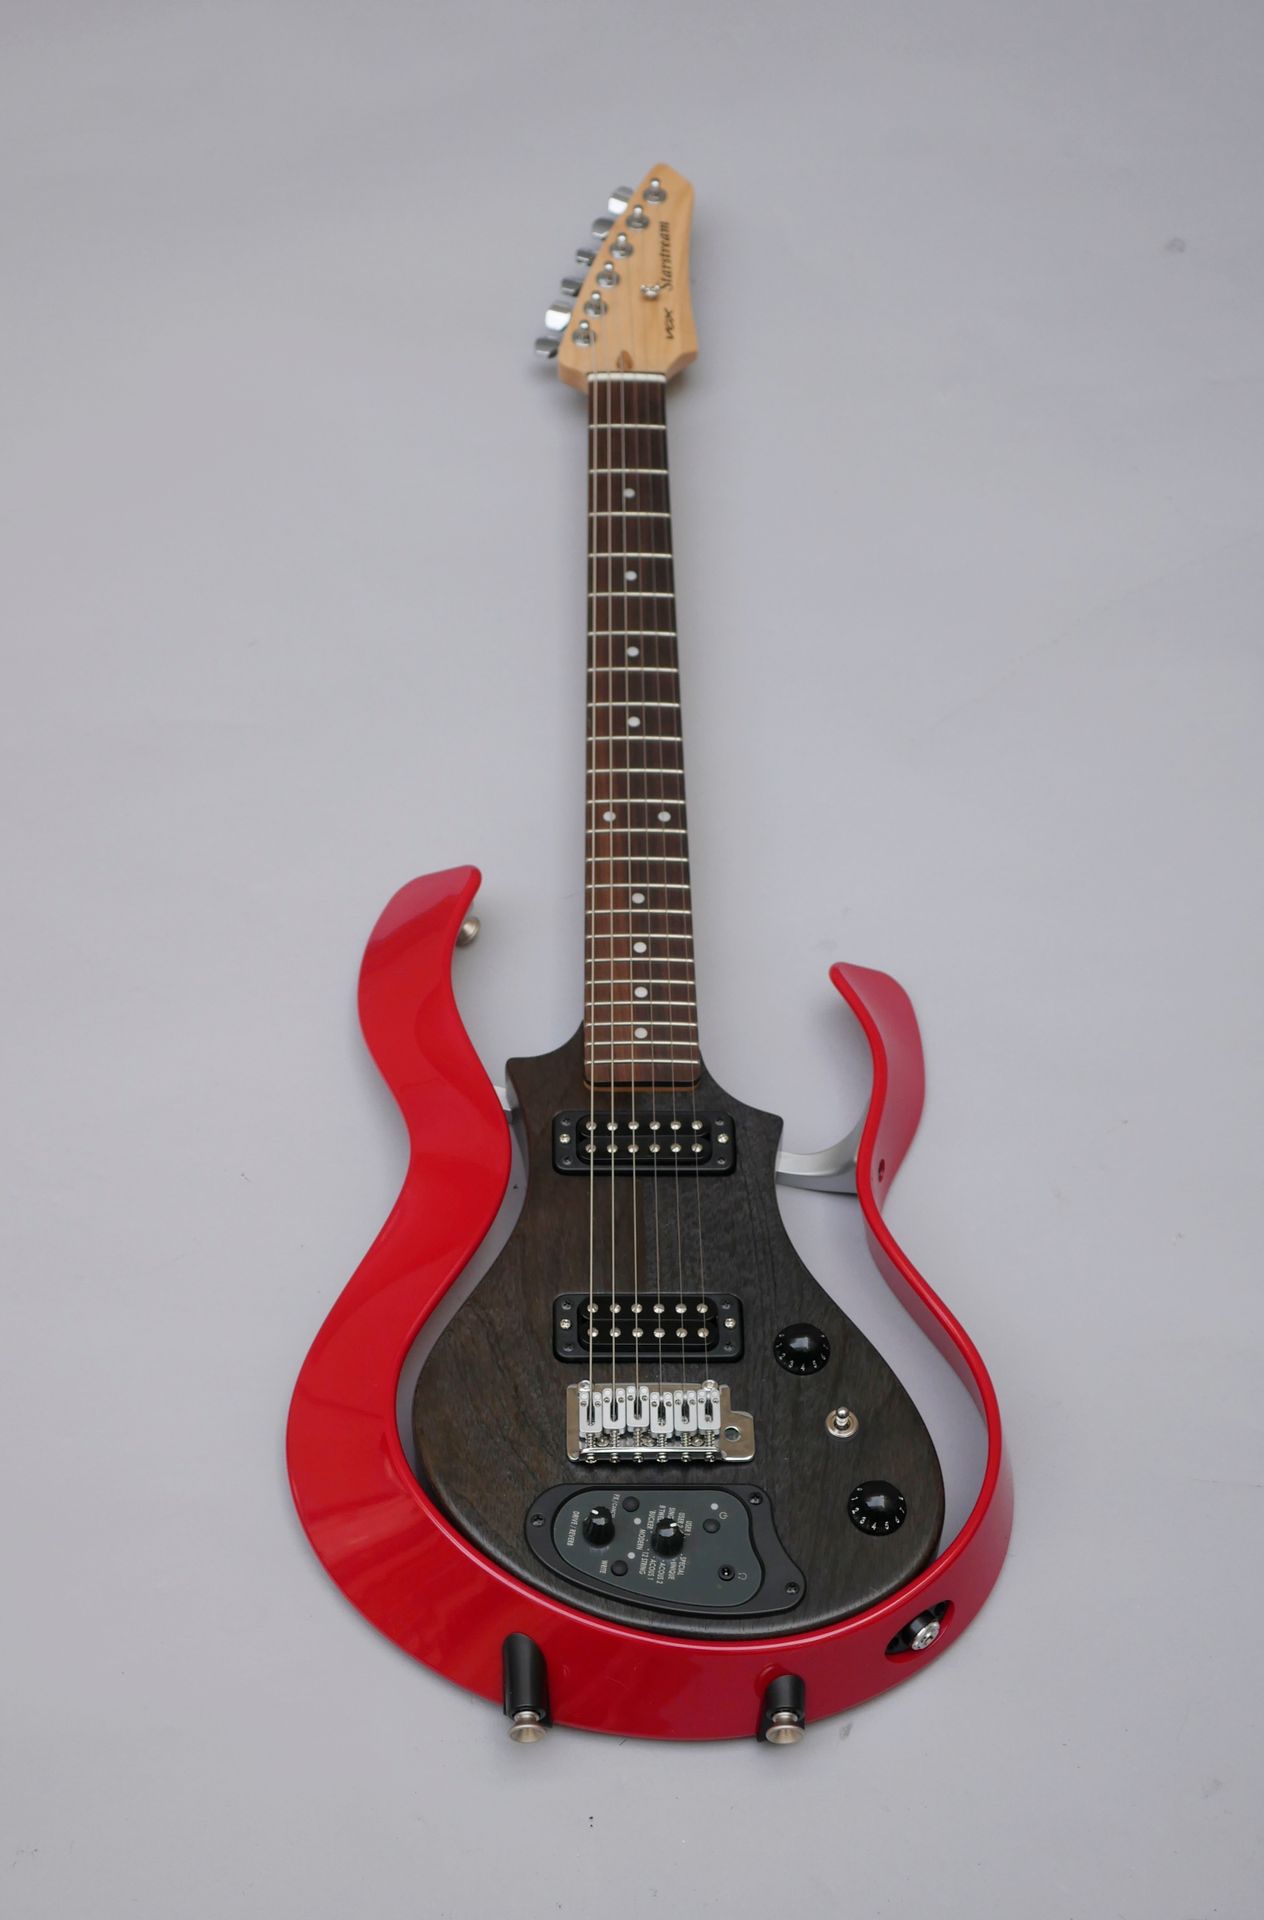 Null Guitare électronique Solidbody de marque VOX modèle Startream, made in Japa&hellip;